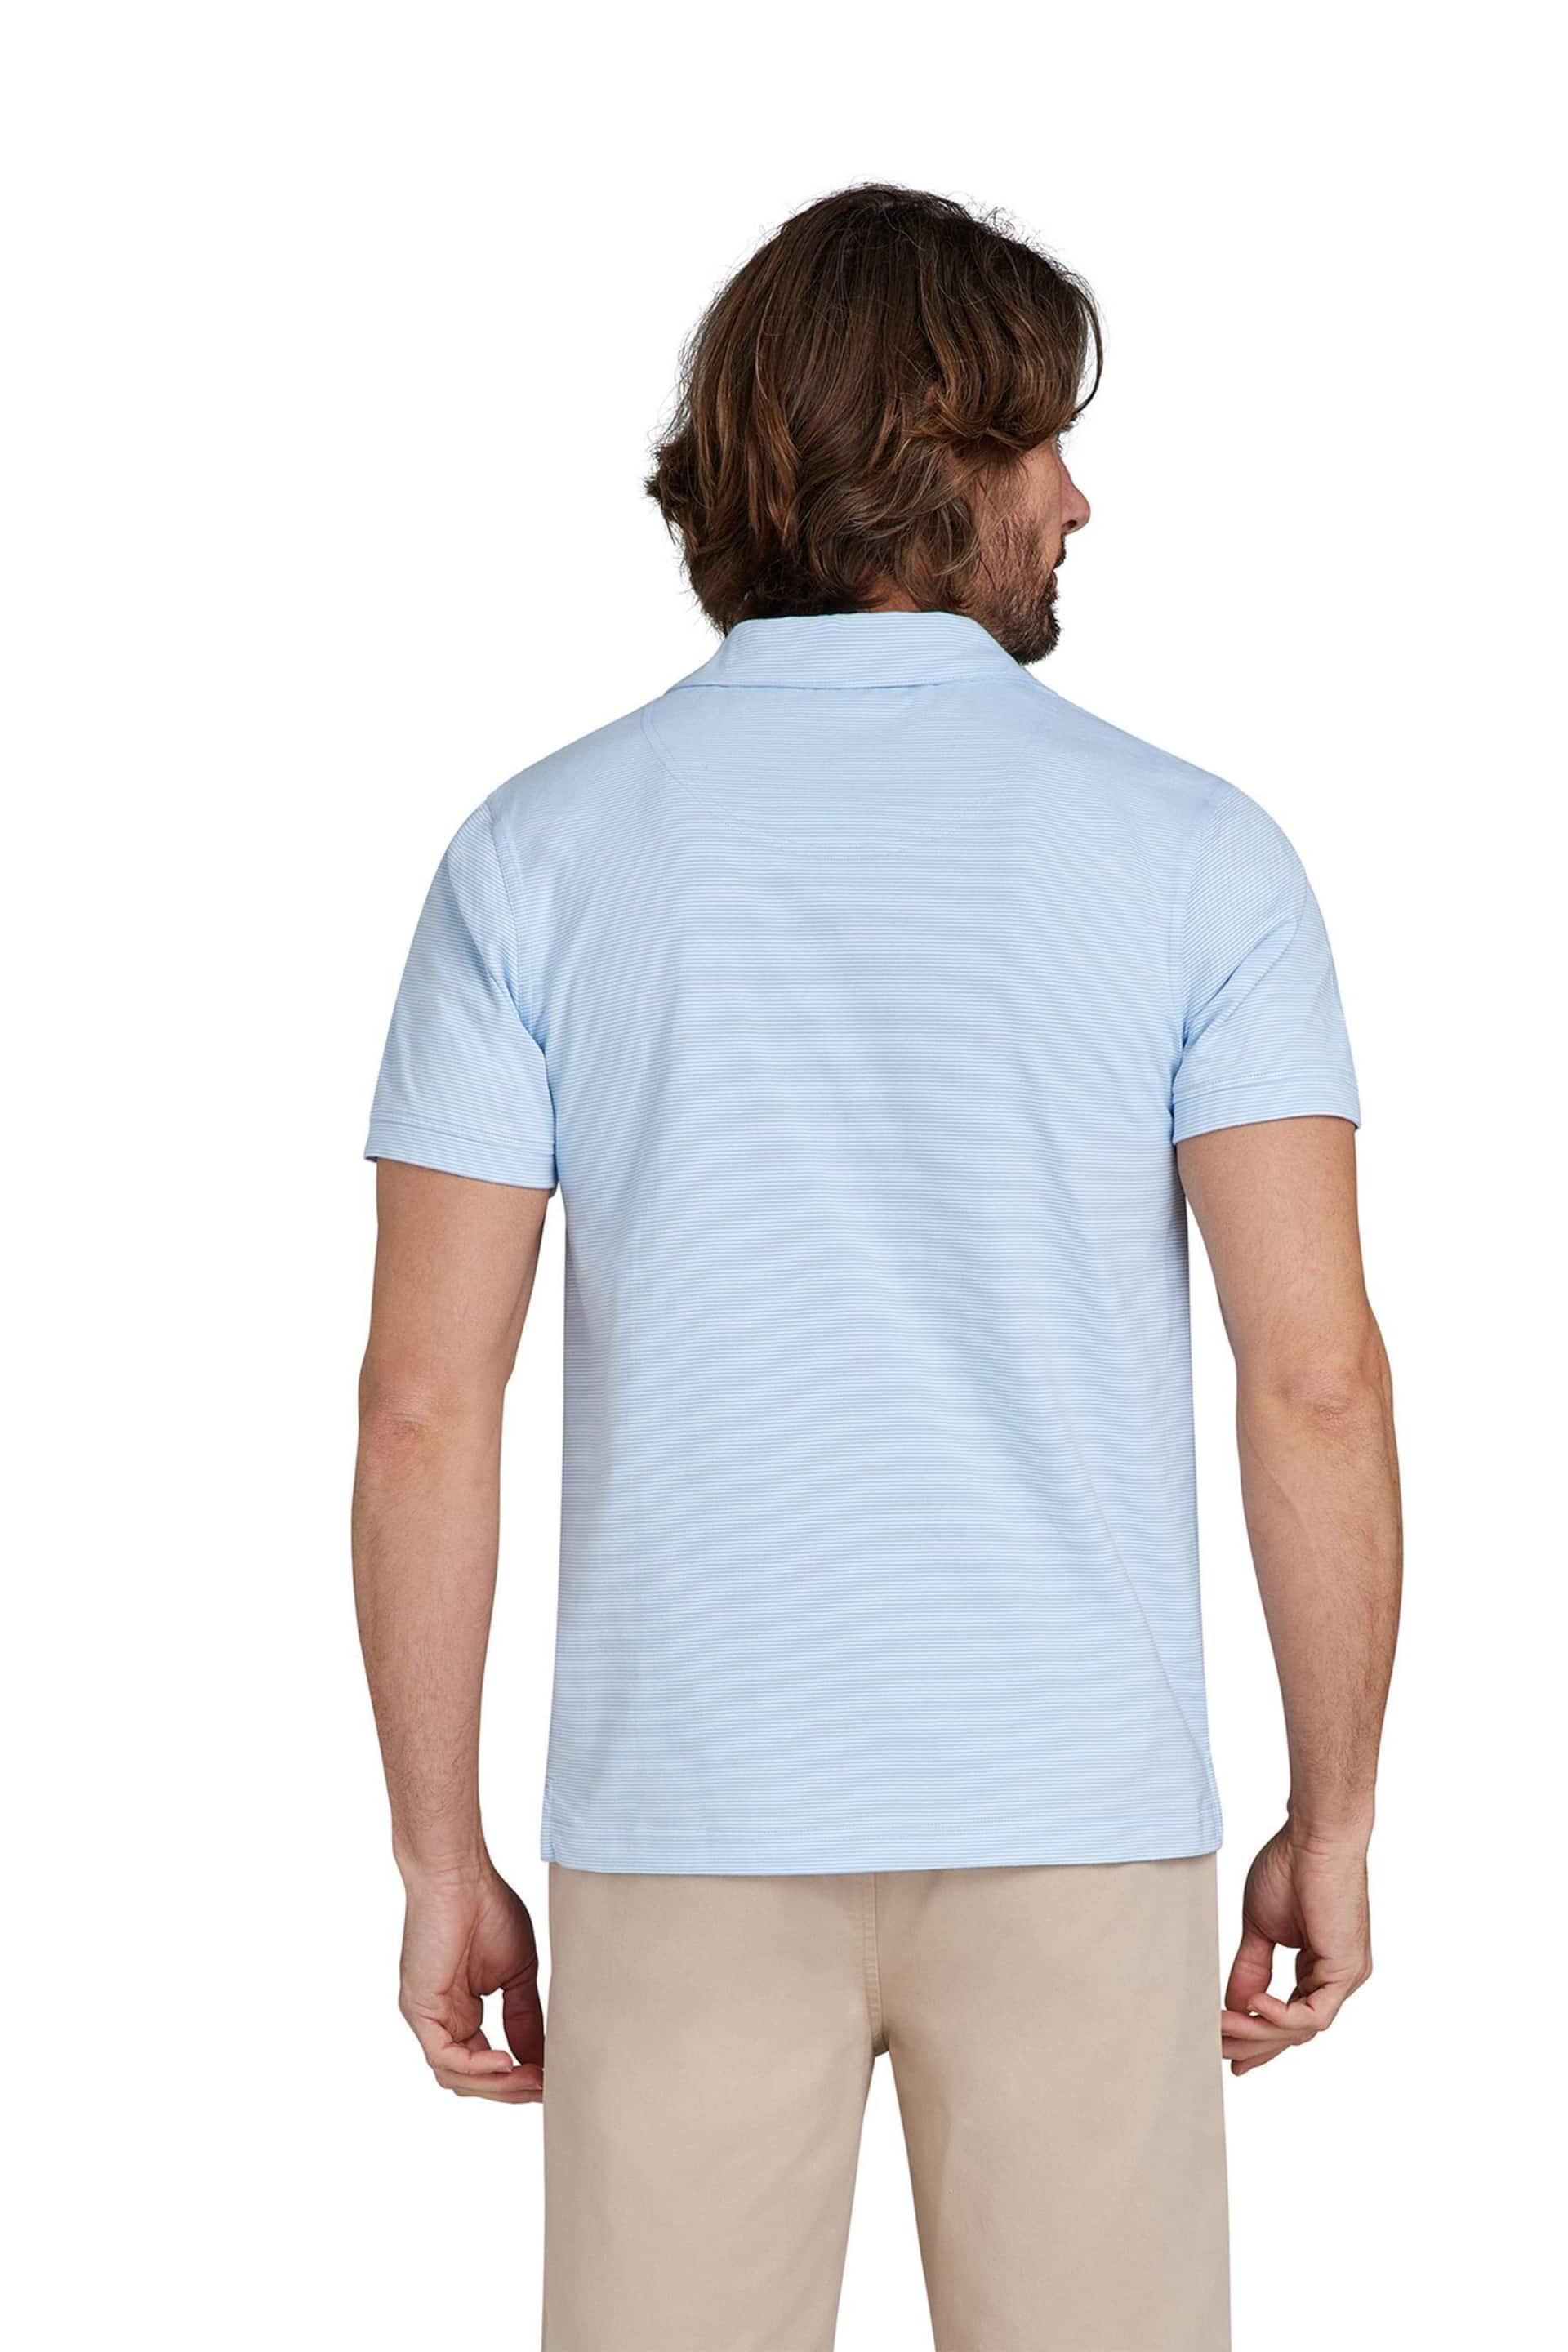 Raging Bull Blue Feeder Stripe Jersey Polo Shirt - Image 2 of 7